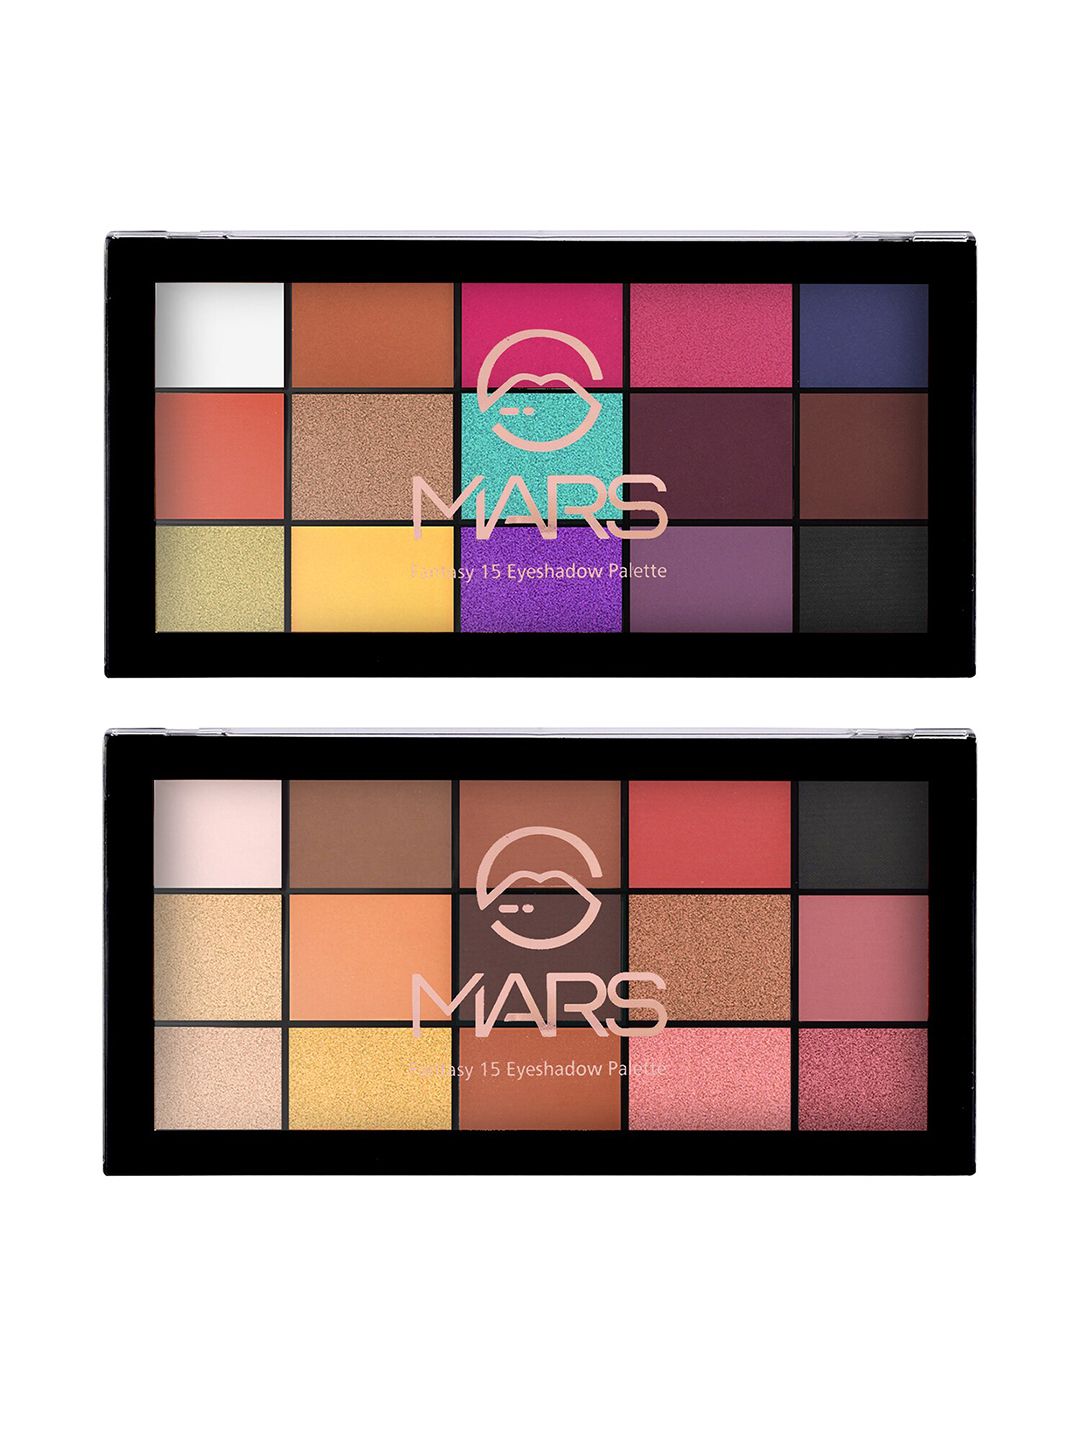 MARS Set of 2 Fantasy 15 Eyeshadow Palette - Shades 01 & 03 Price in India